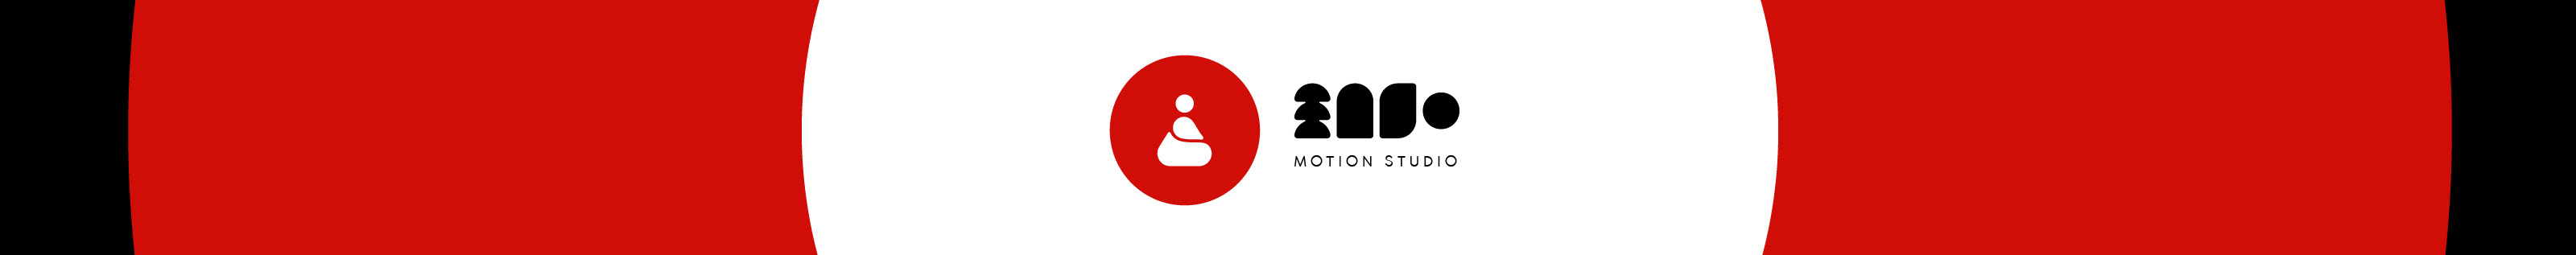 Enso Animation Studio's profile banner